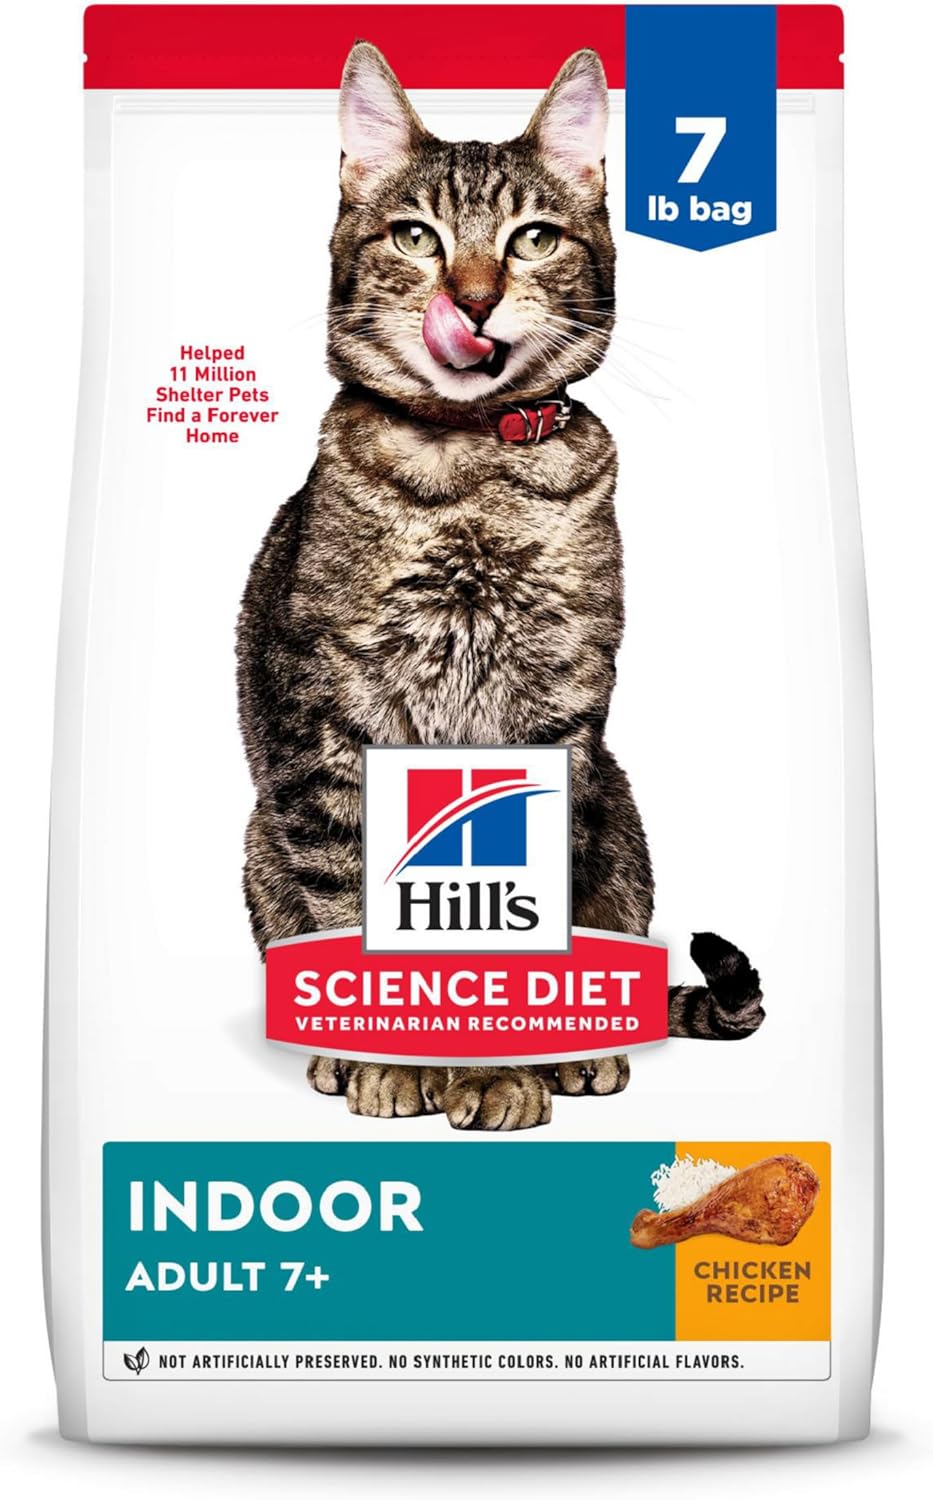 Hills Science Diet-Indoor Adult Cat Food-7LB Bag